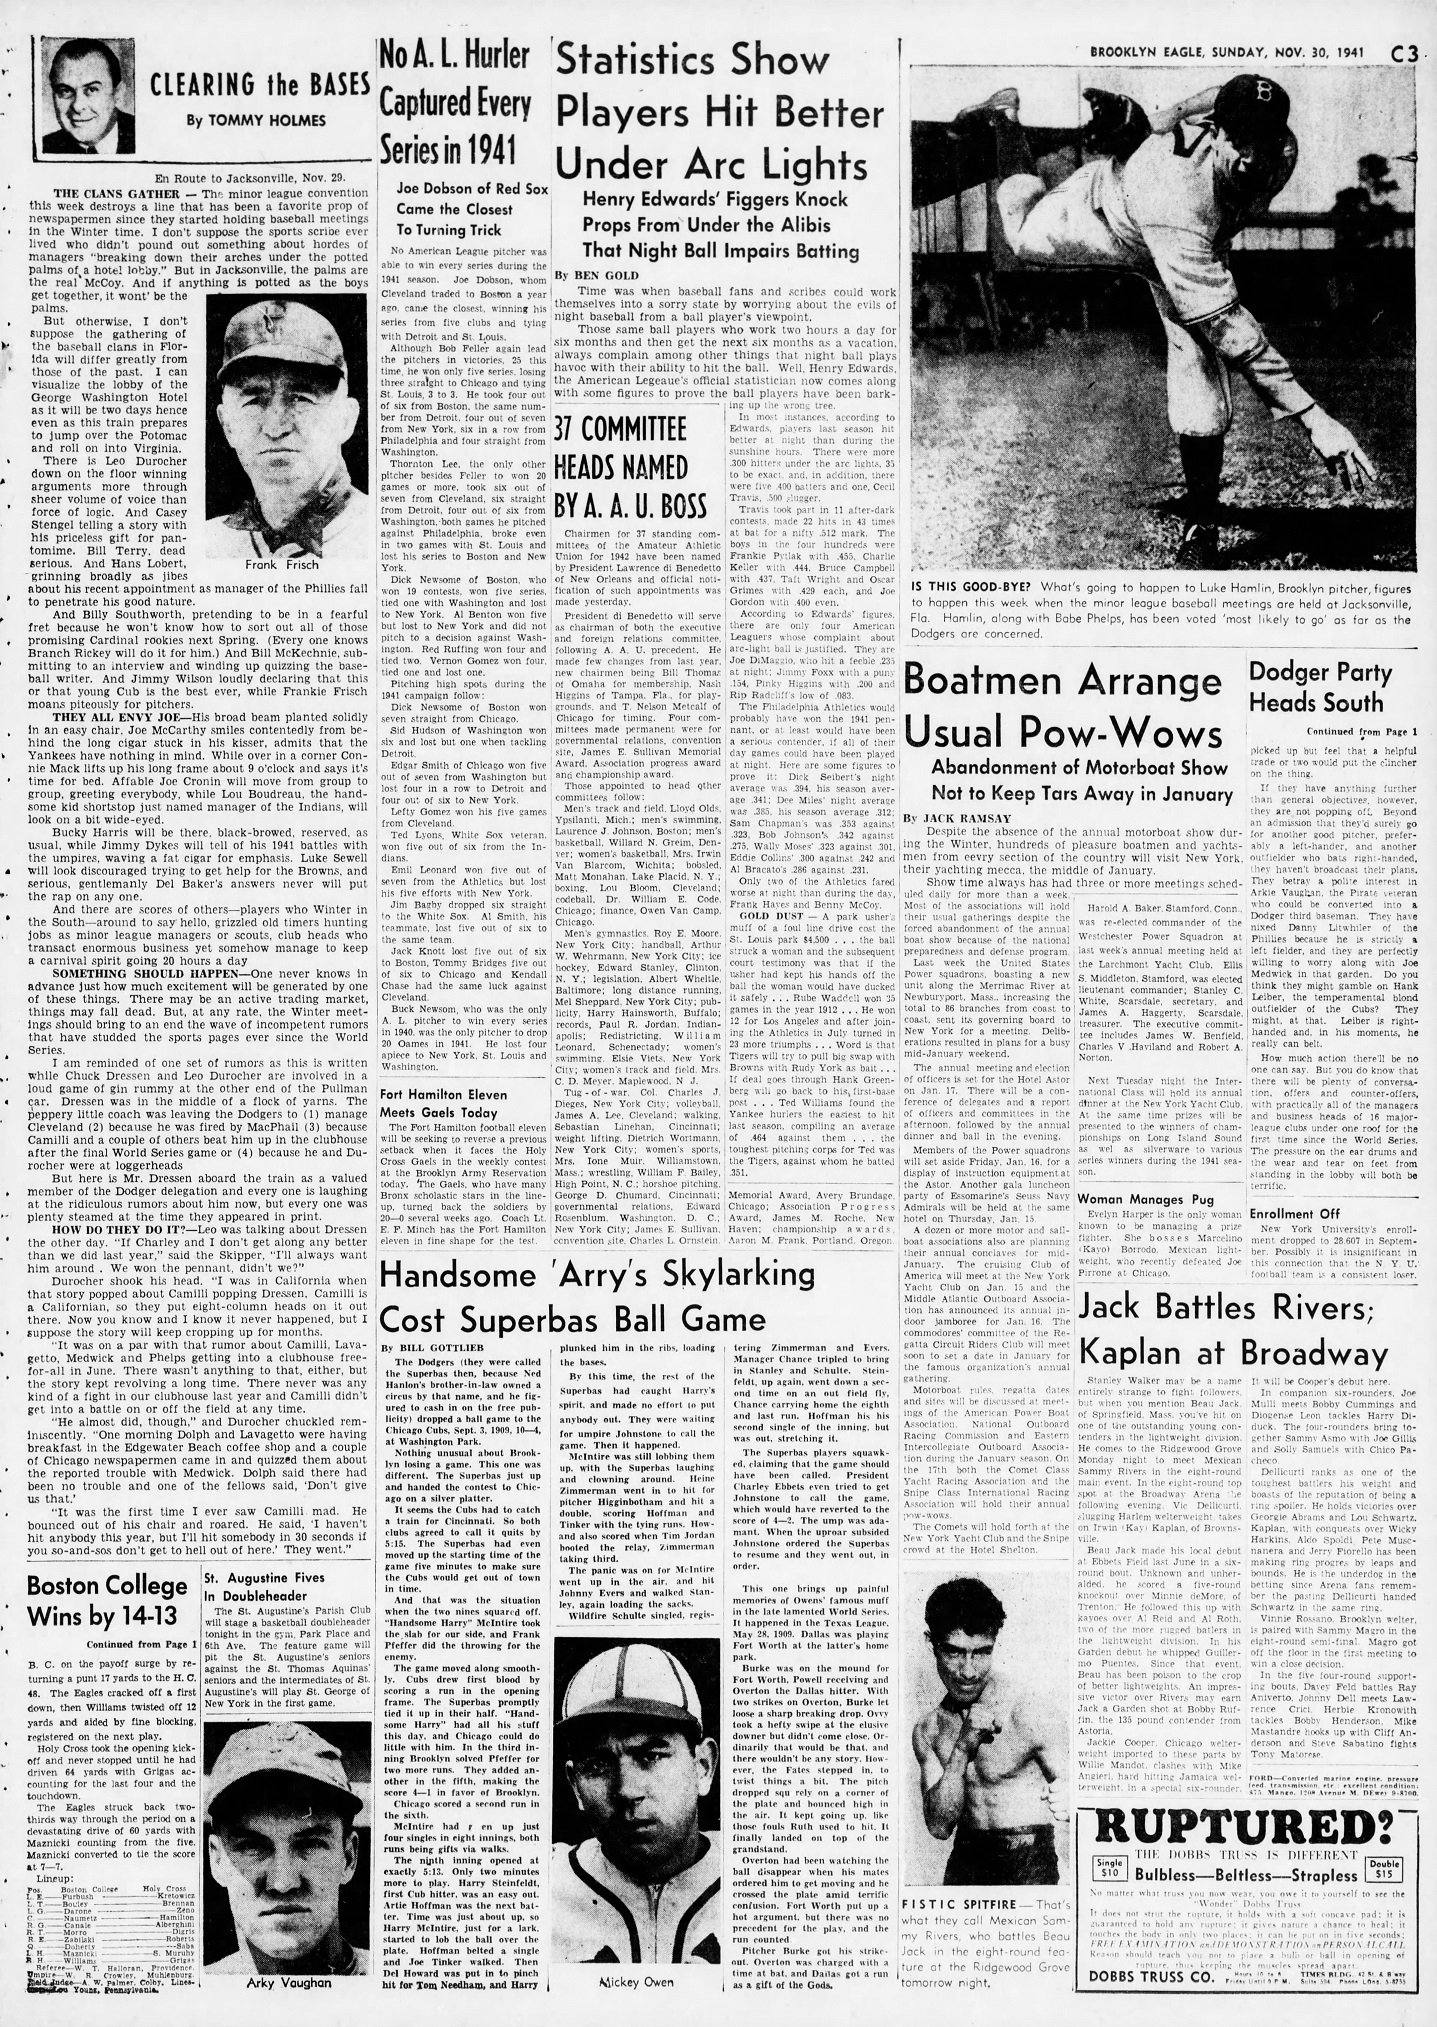 The_Brooklyn_Daily_Eagle_Sun__Nov_30__1941_(2).jpg